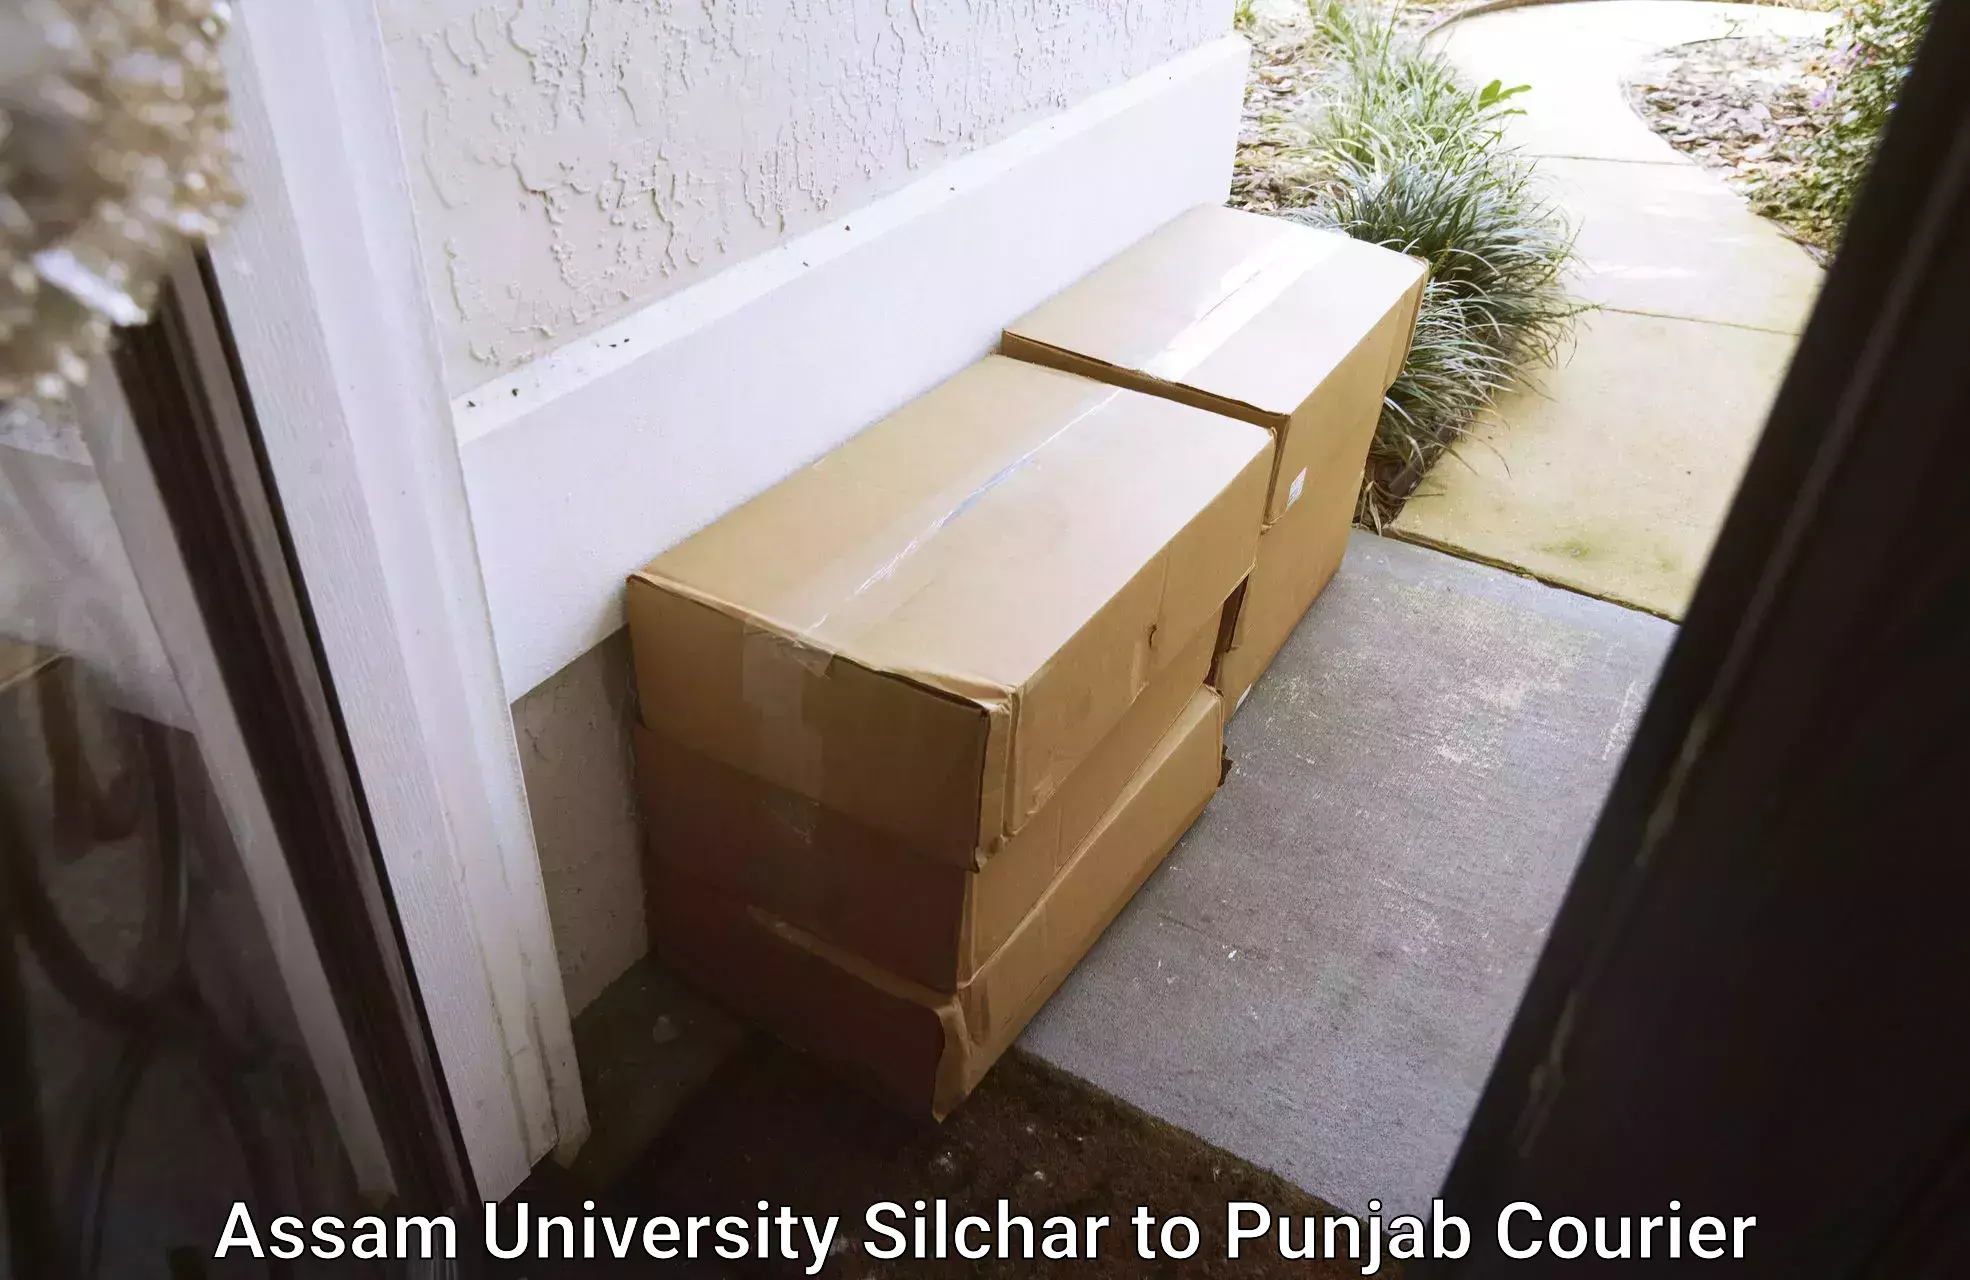 Ocean freight courier Assam University Silchar to Punjab